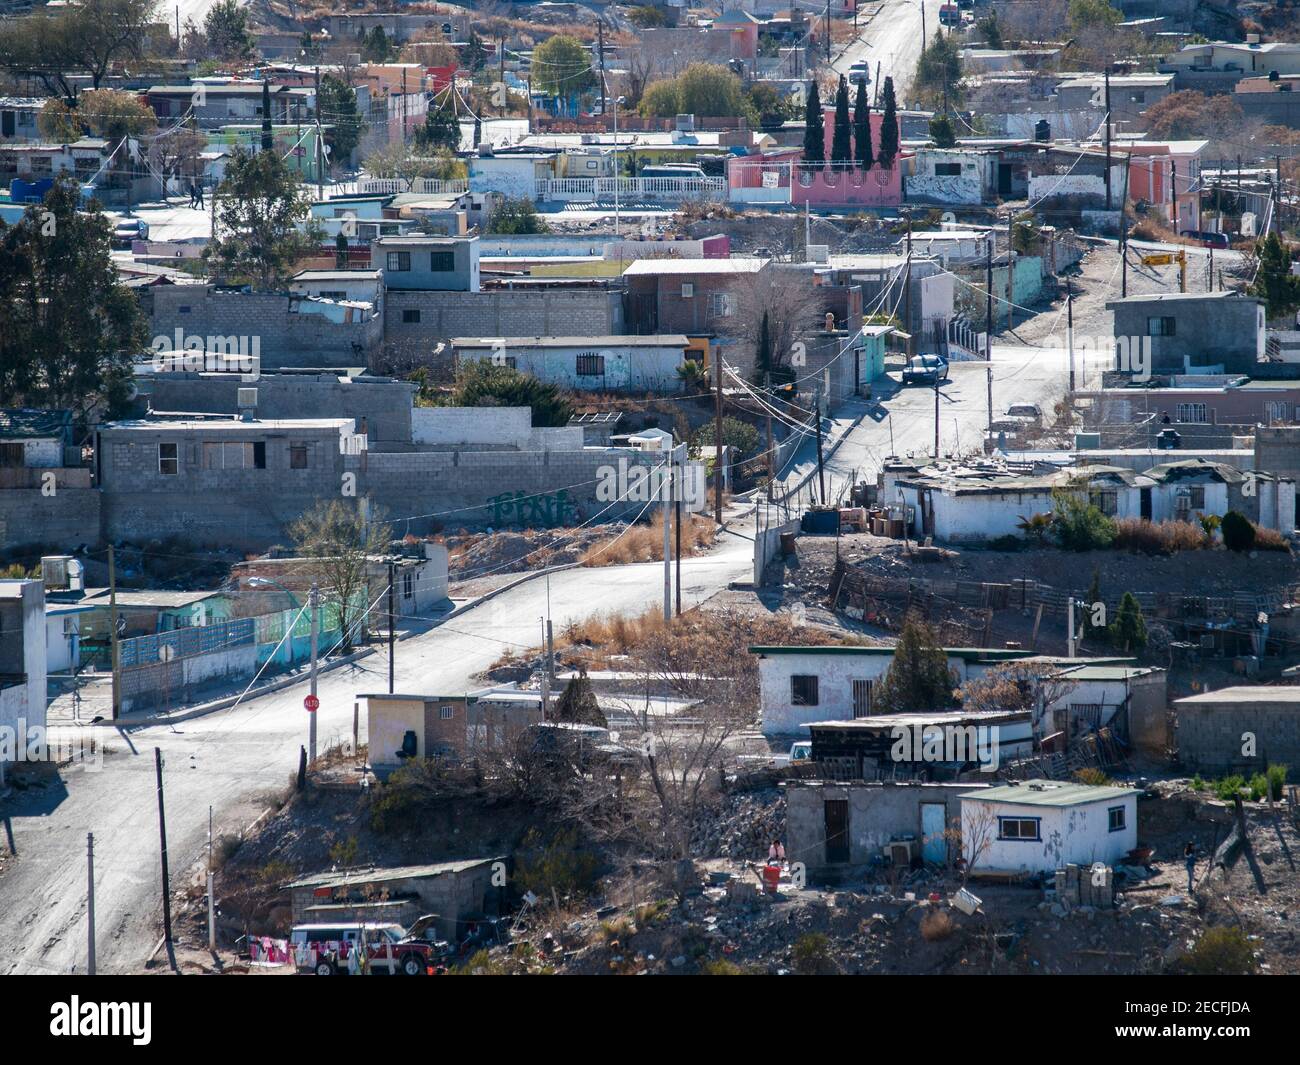 Juarez, Mexcio - January 23, 2011:  View of homes and gritty backstreets in sprawling Ciudad Juarez, Chihuahua, Mexico. Stock Photo